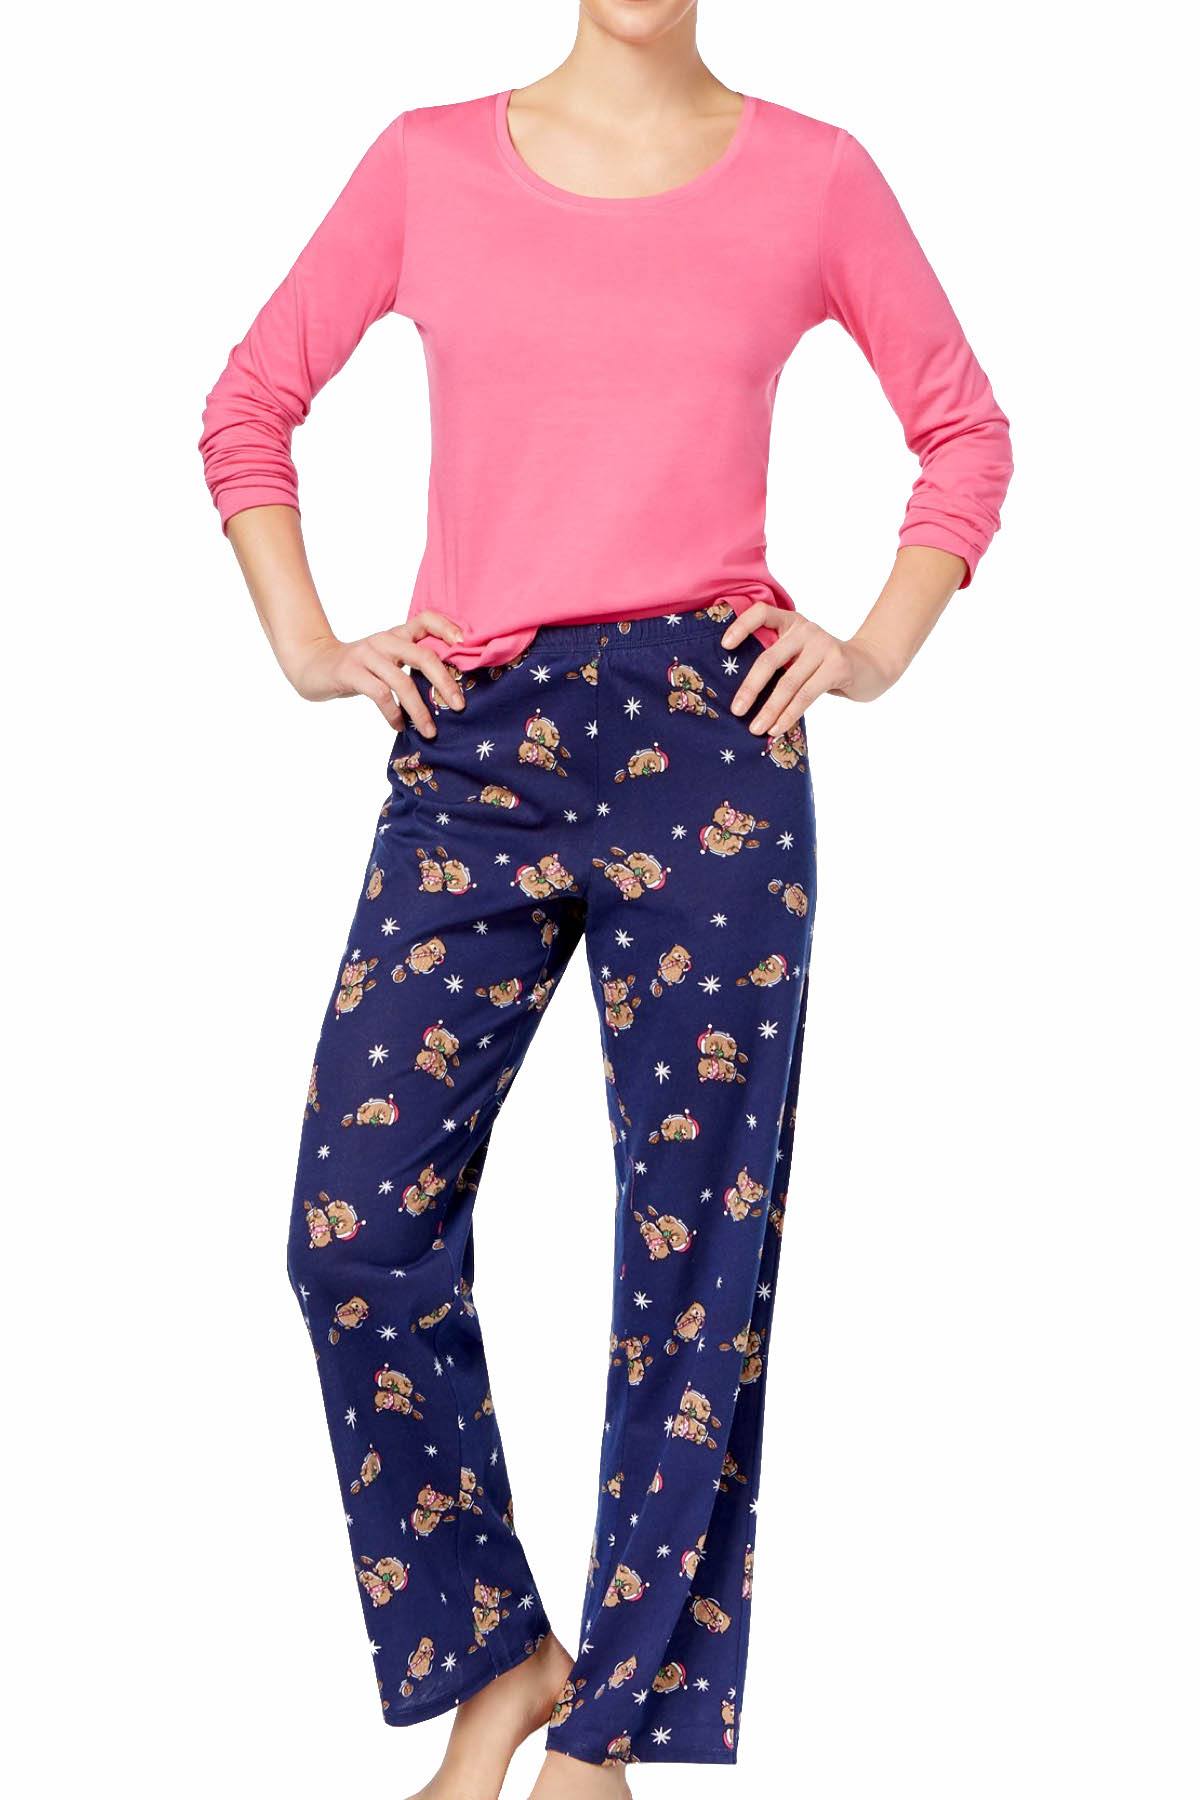 Jenni by Jennifer Moore Pink/Navy Otter-Love Knit Top & Printed Pant PJ Set